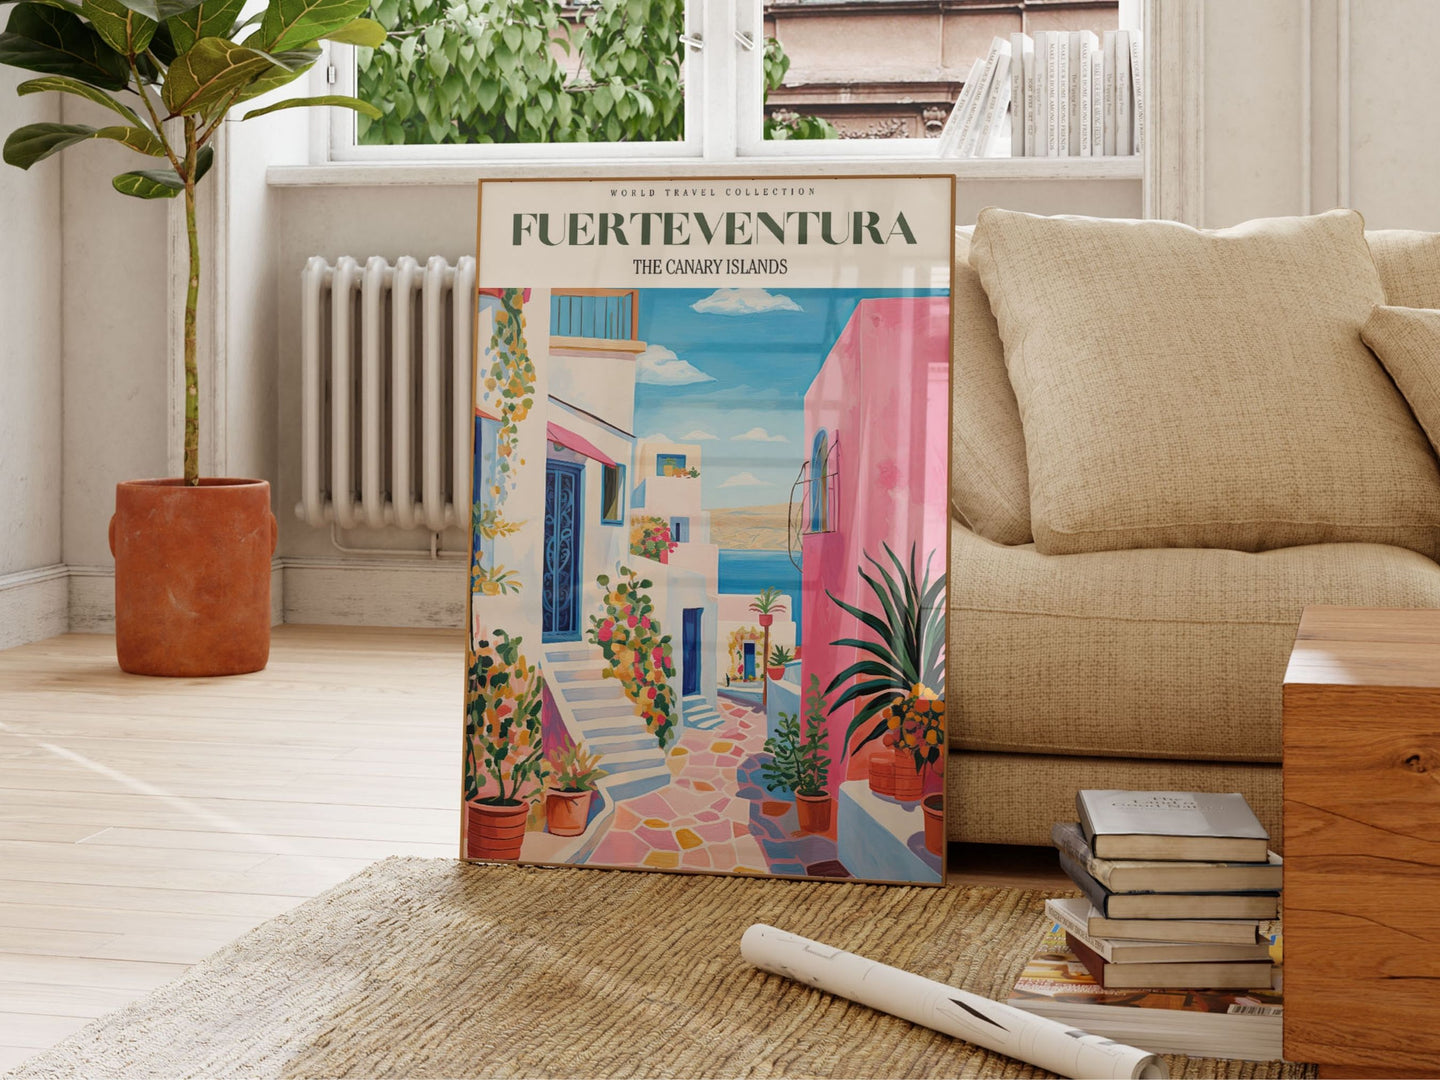 Fuerteventura Travel Art, Fuerteventura Wall Art, Spain Traveler's Gift, Europe Print, Spain Art Print, Travel Art Print, Canary Islands